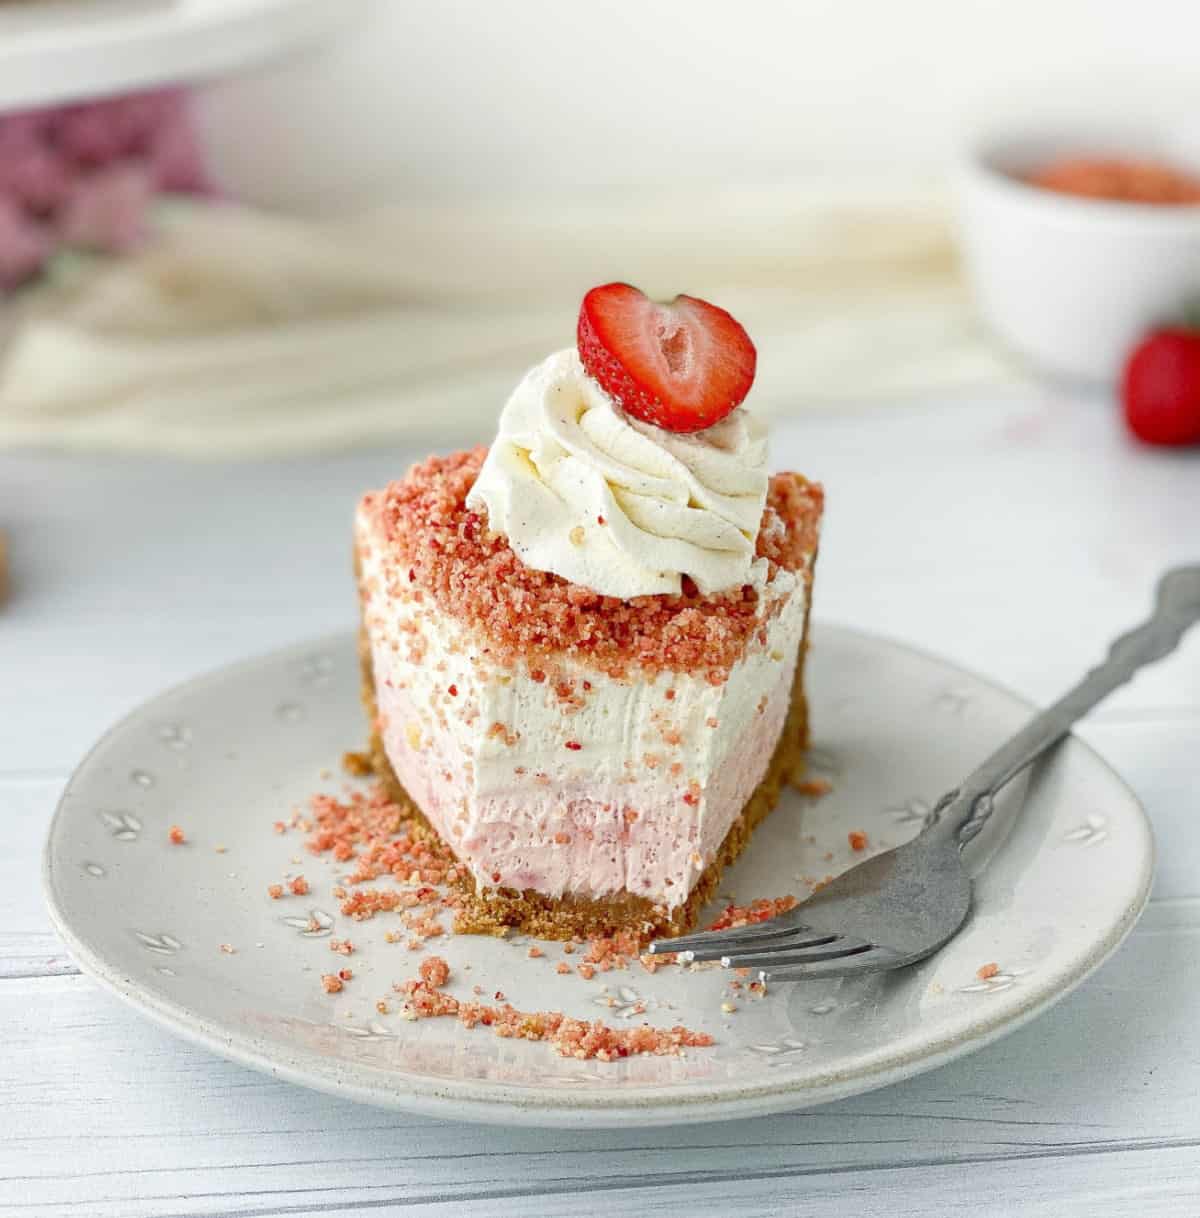 Slice of Strawberry Crunch Cheesecake with bite.